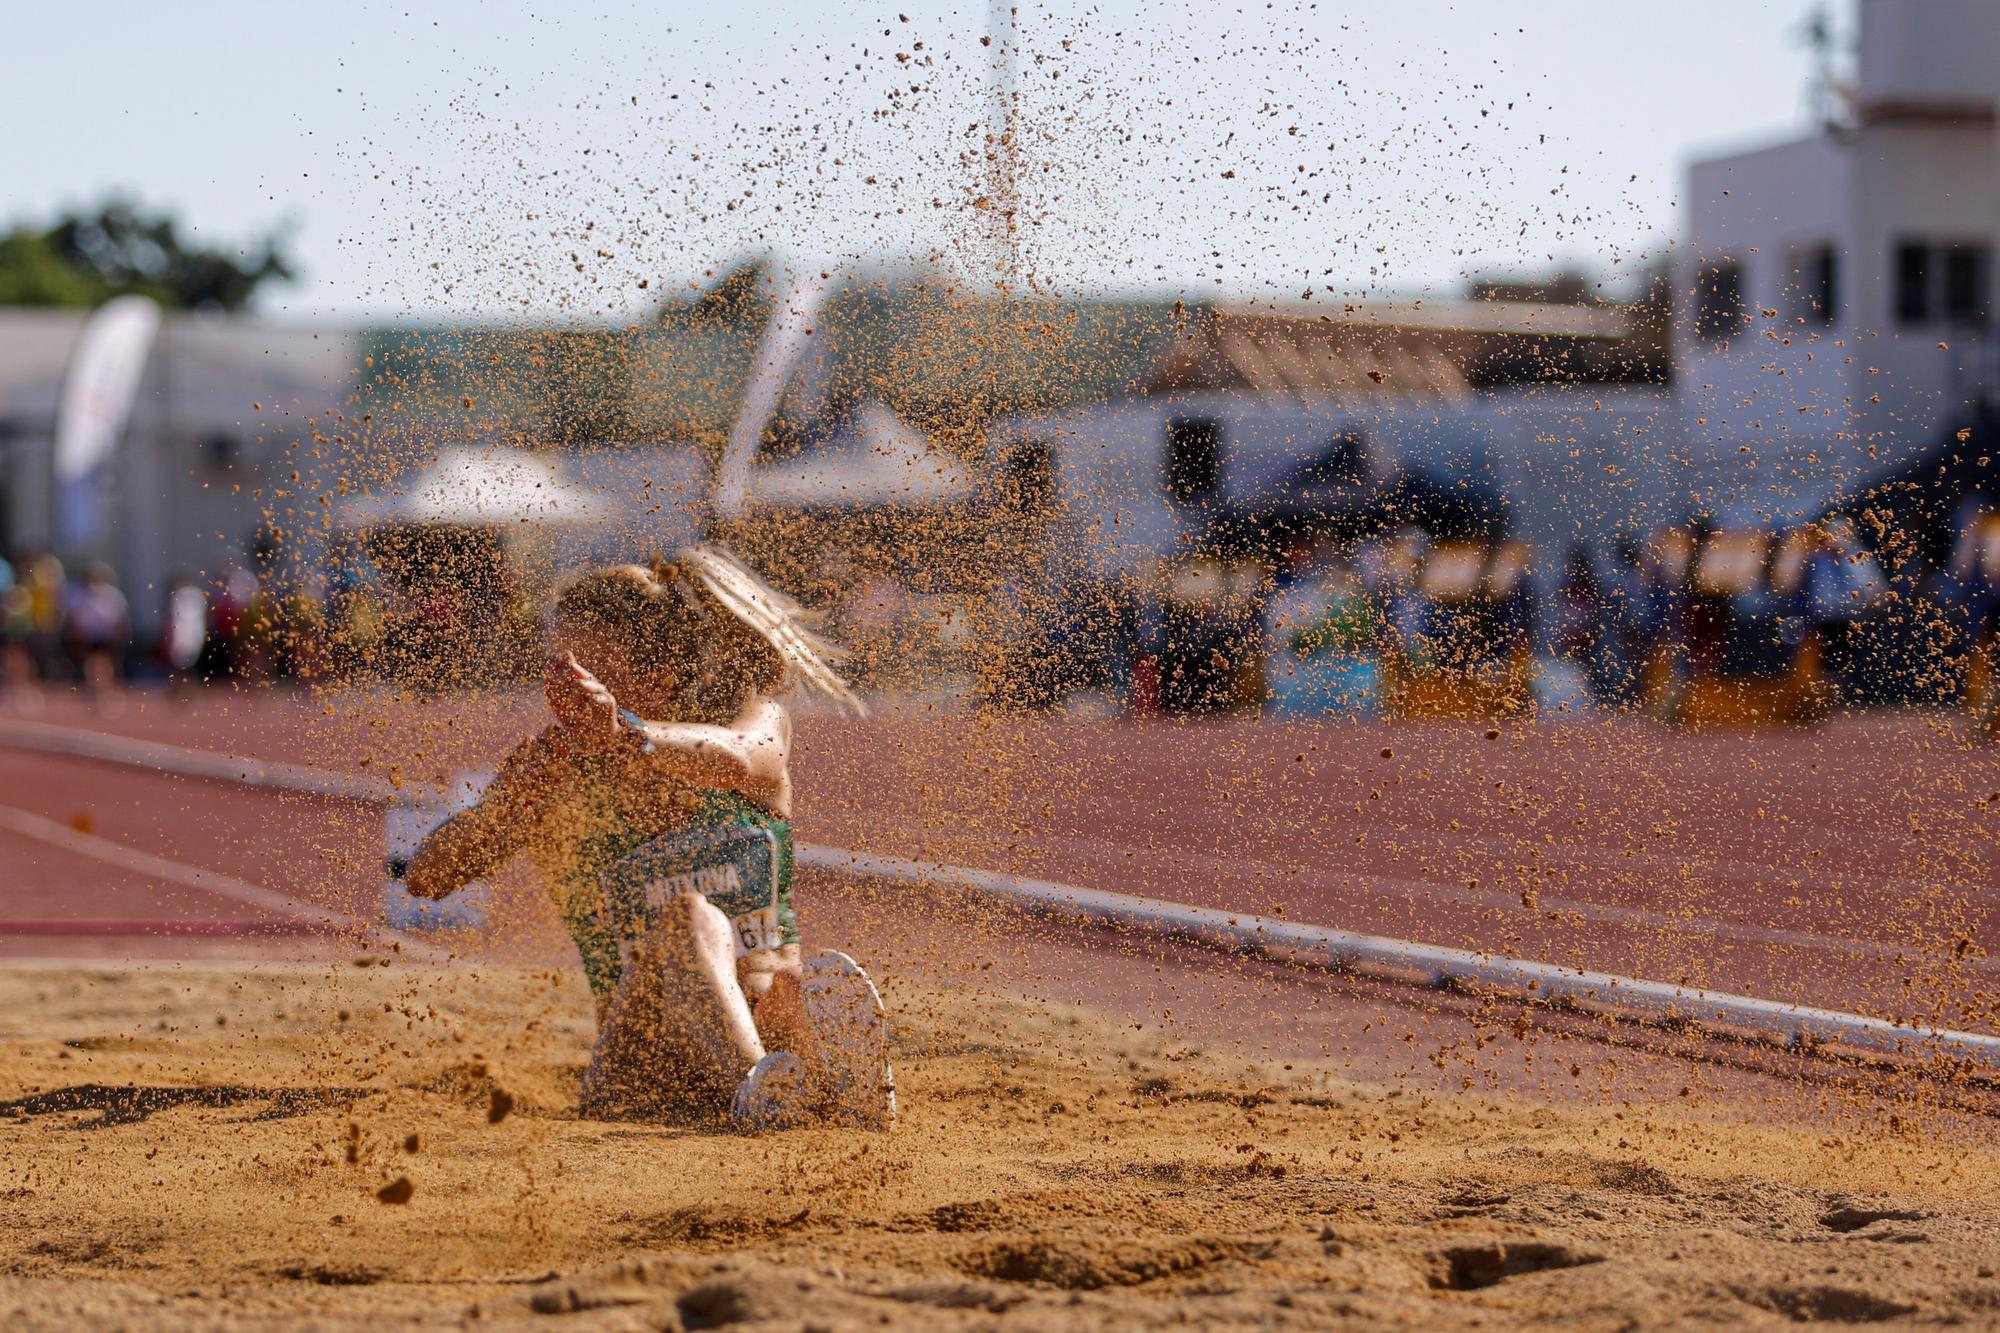 Las mejores imágenes del Meeting de Ibiza 'Toni Bonet' de atletismo